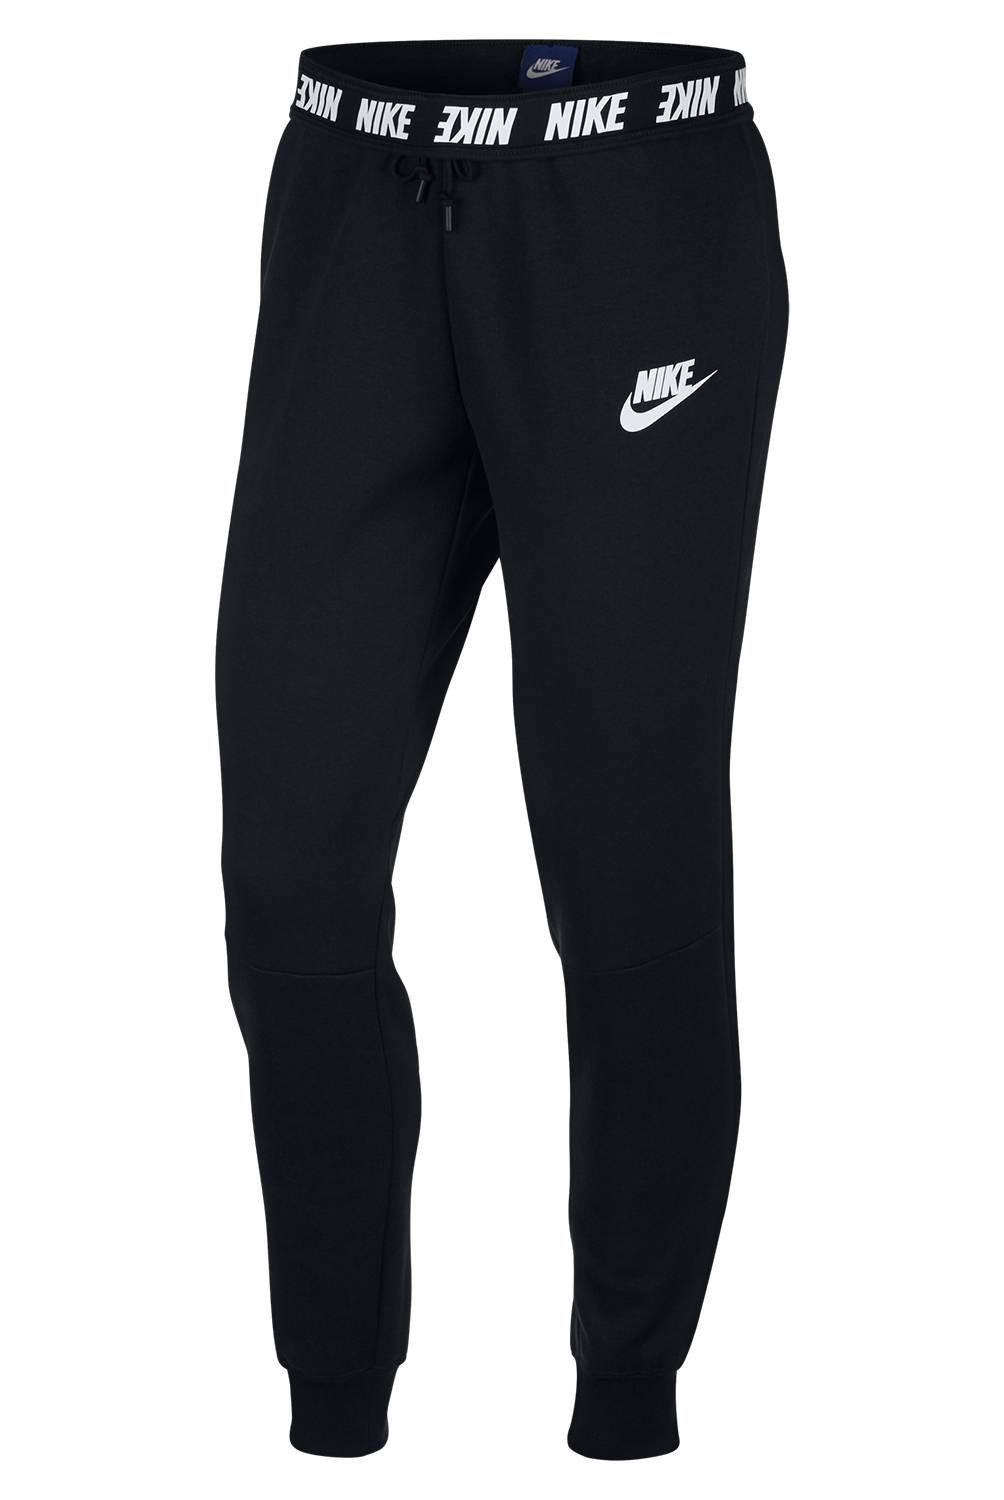 Nike - Pantalón